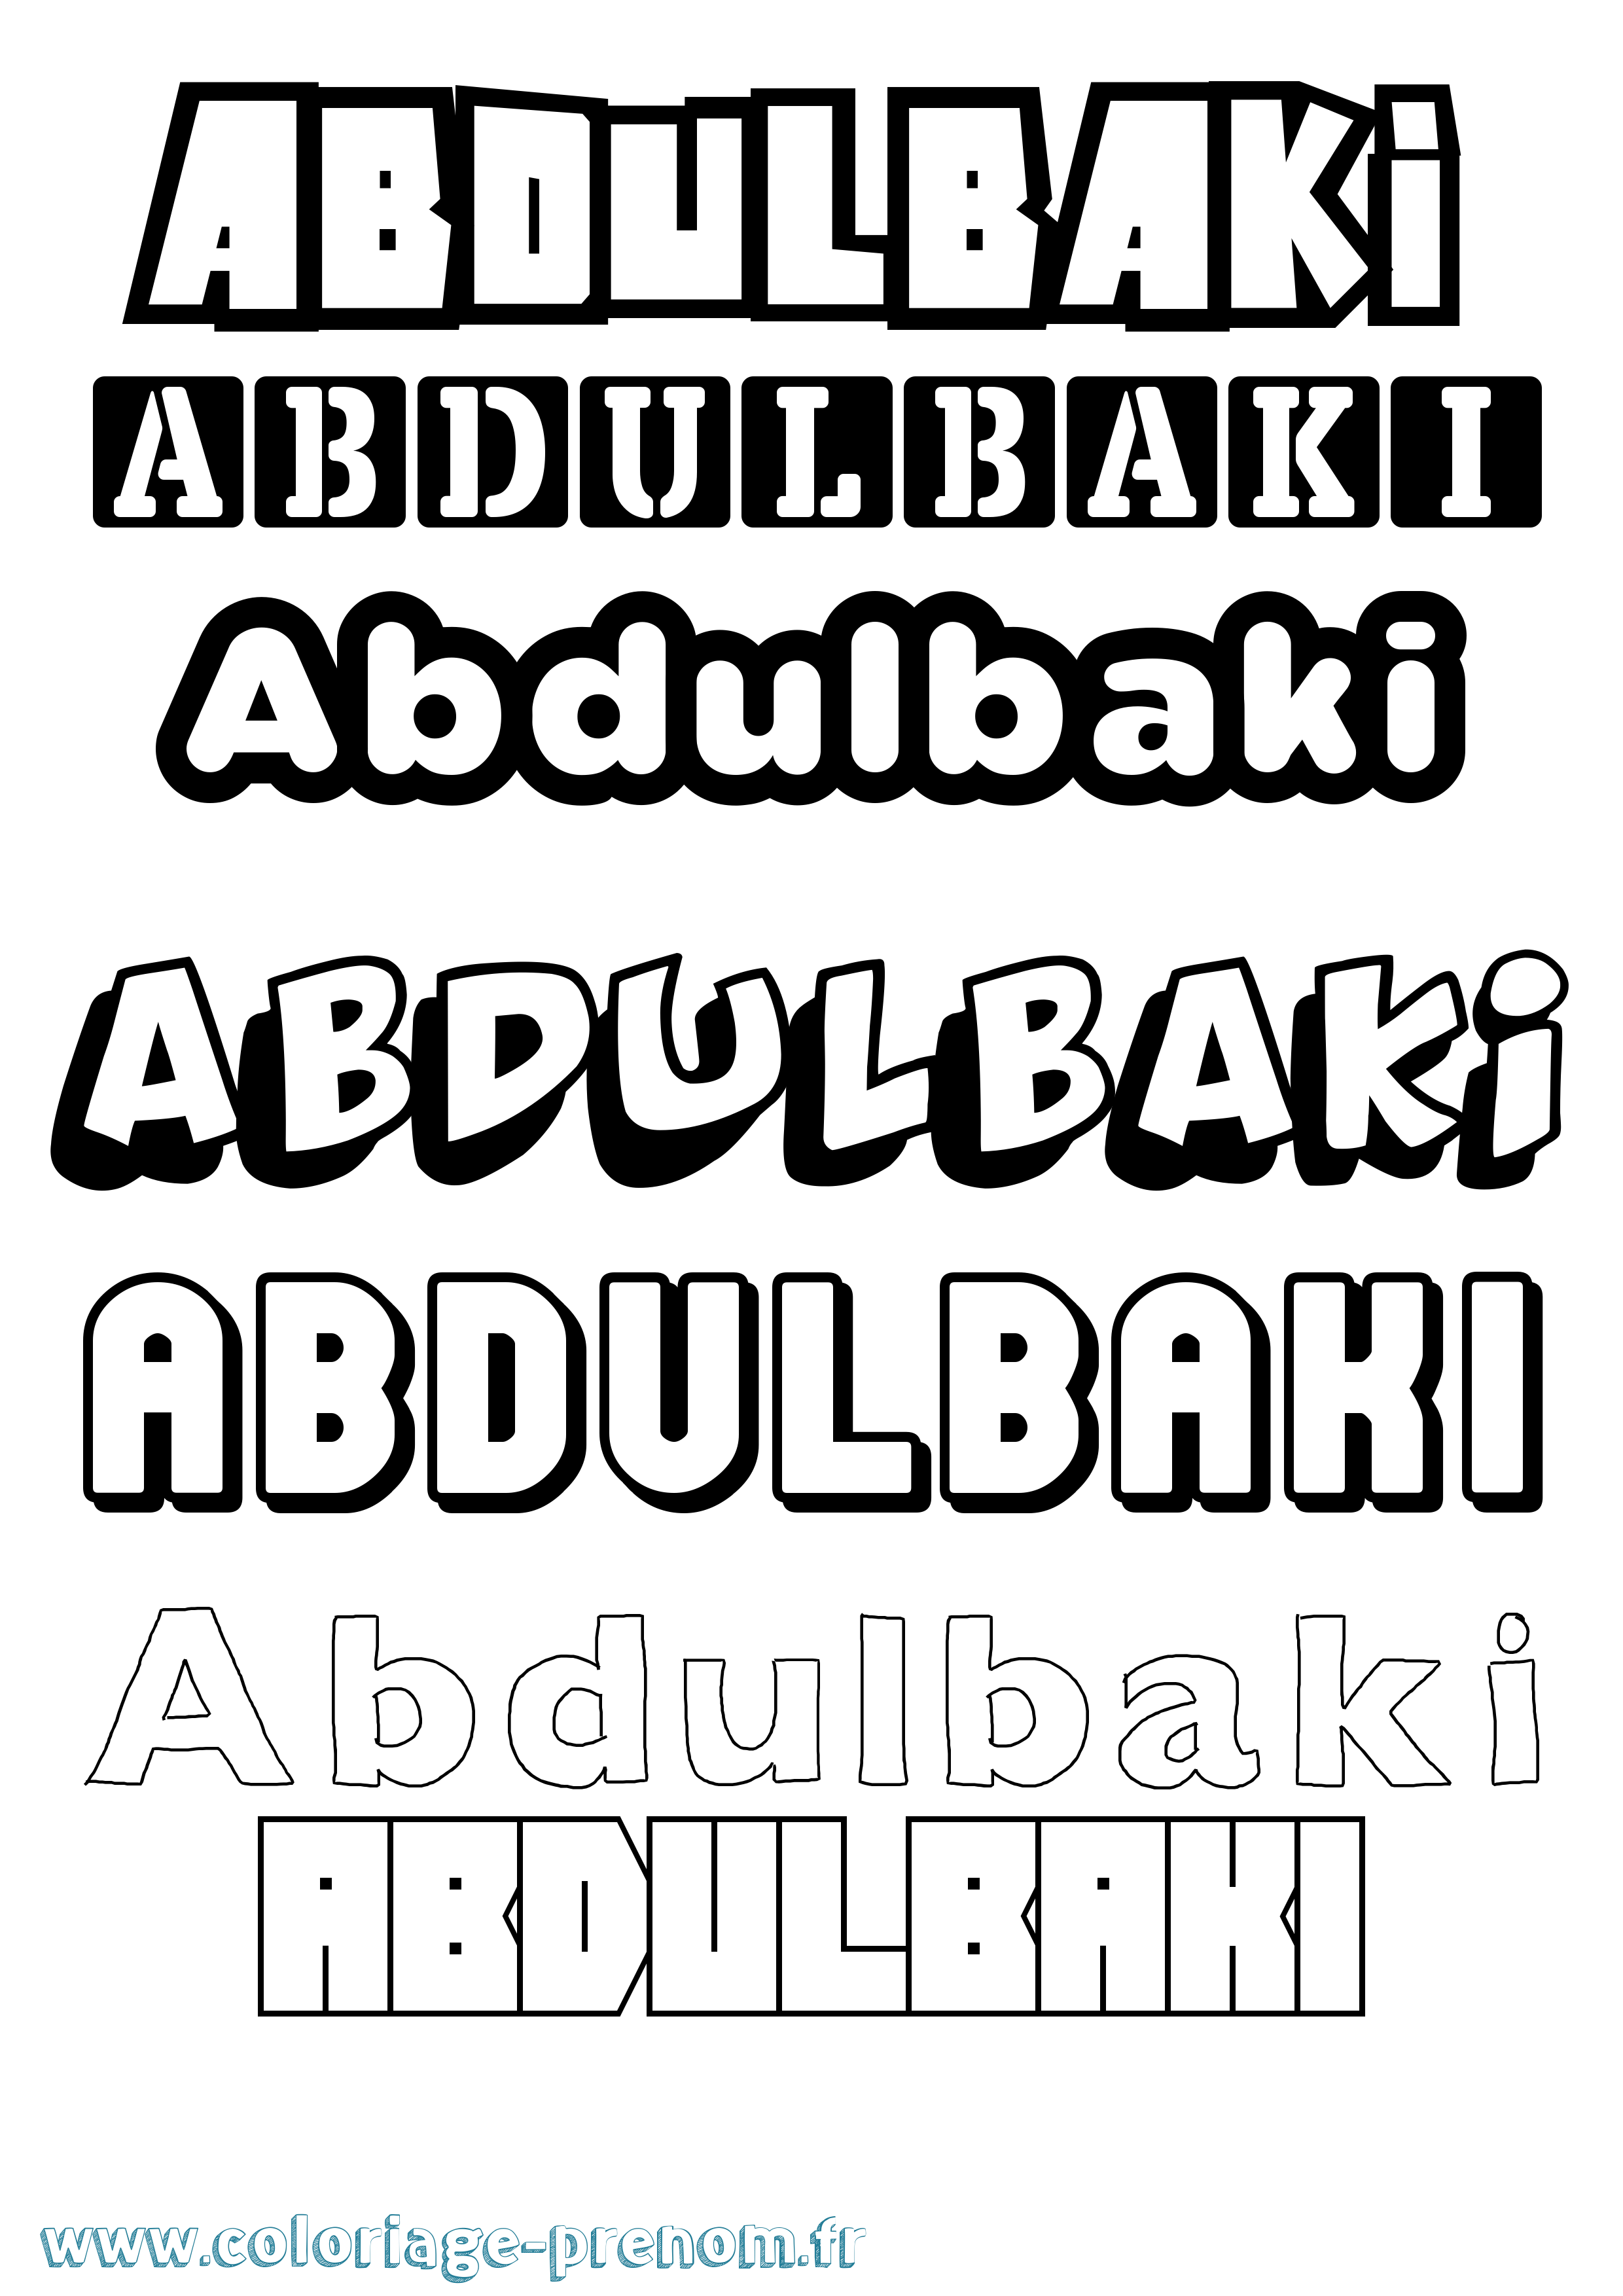 Coloriage prénom Abdulbaki Simple